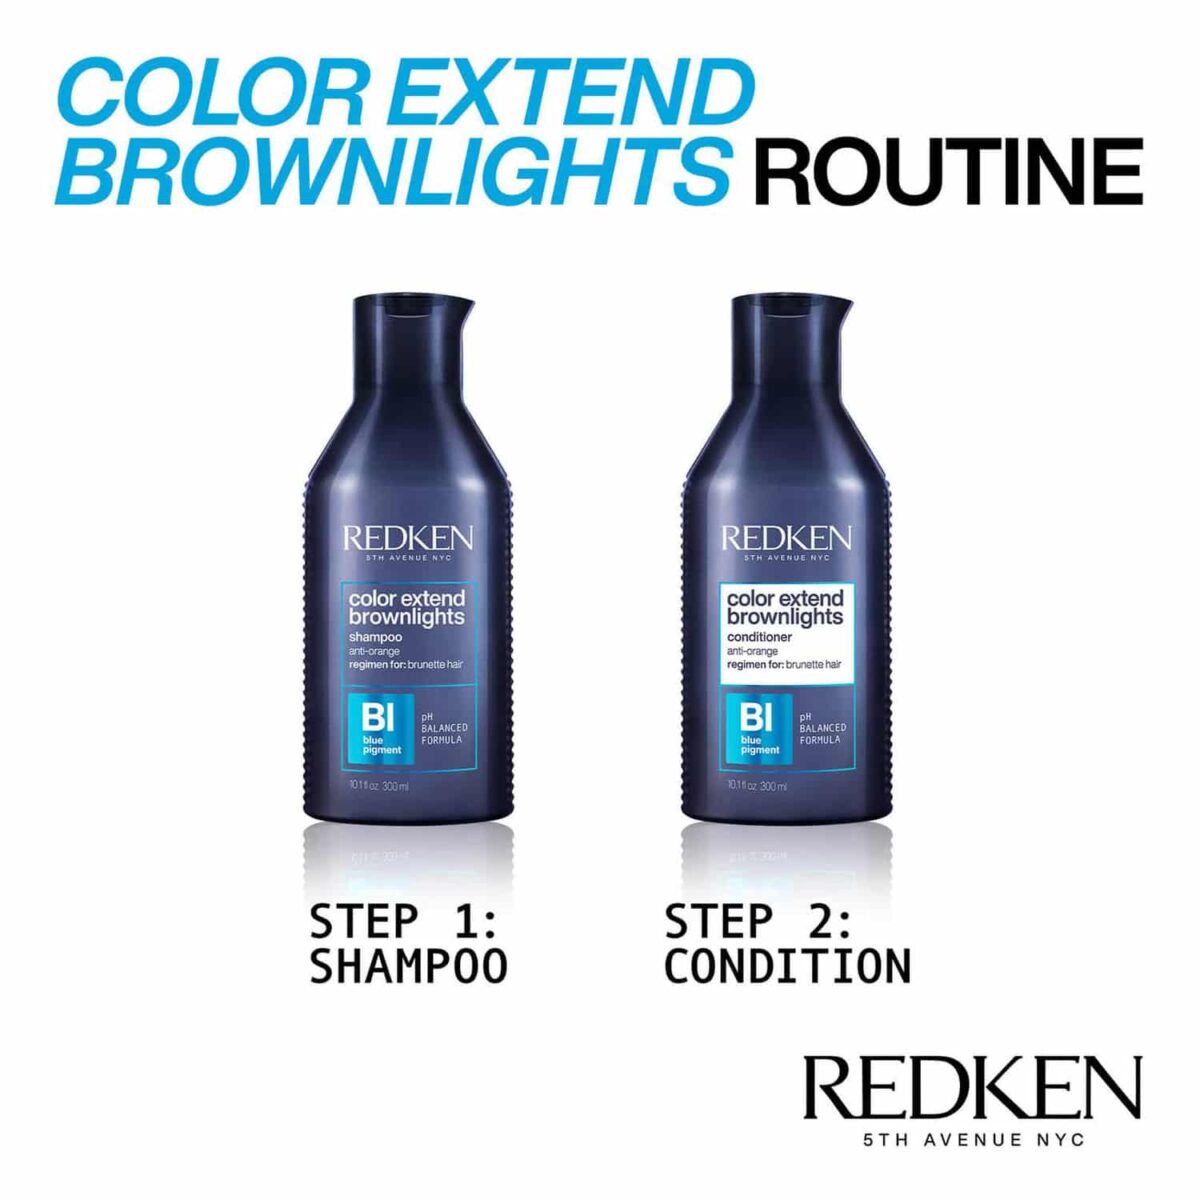 Redken Color Extend Brownlights Routine